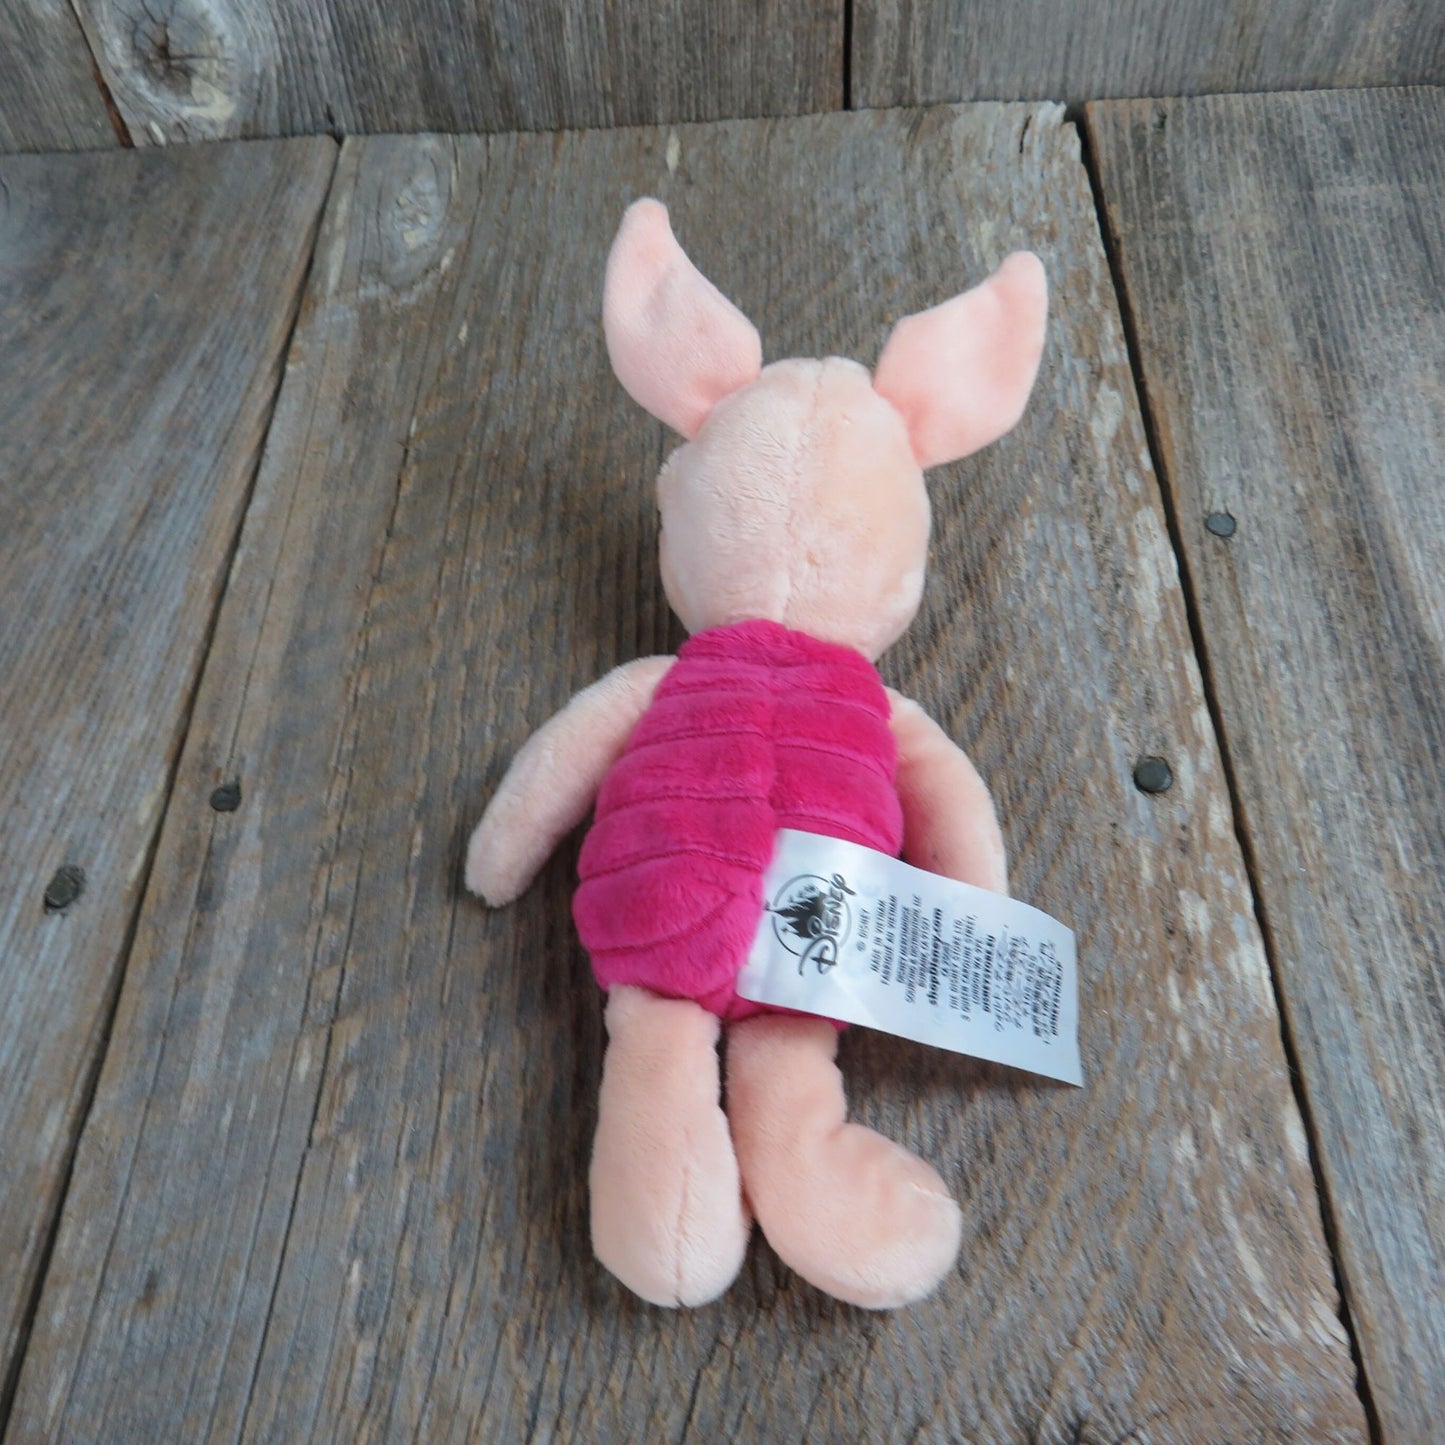 Piglet Plush Winnie the Pooh Beanie Pink Pig Stuffed Animal Disney Store